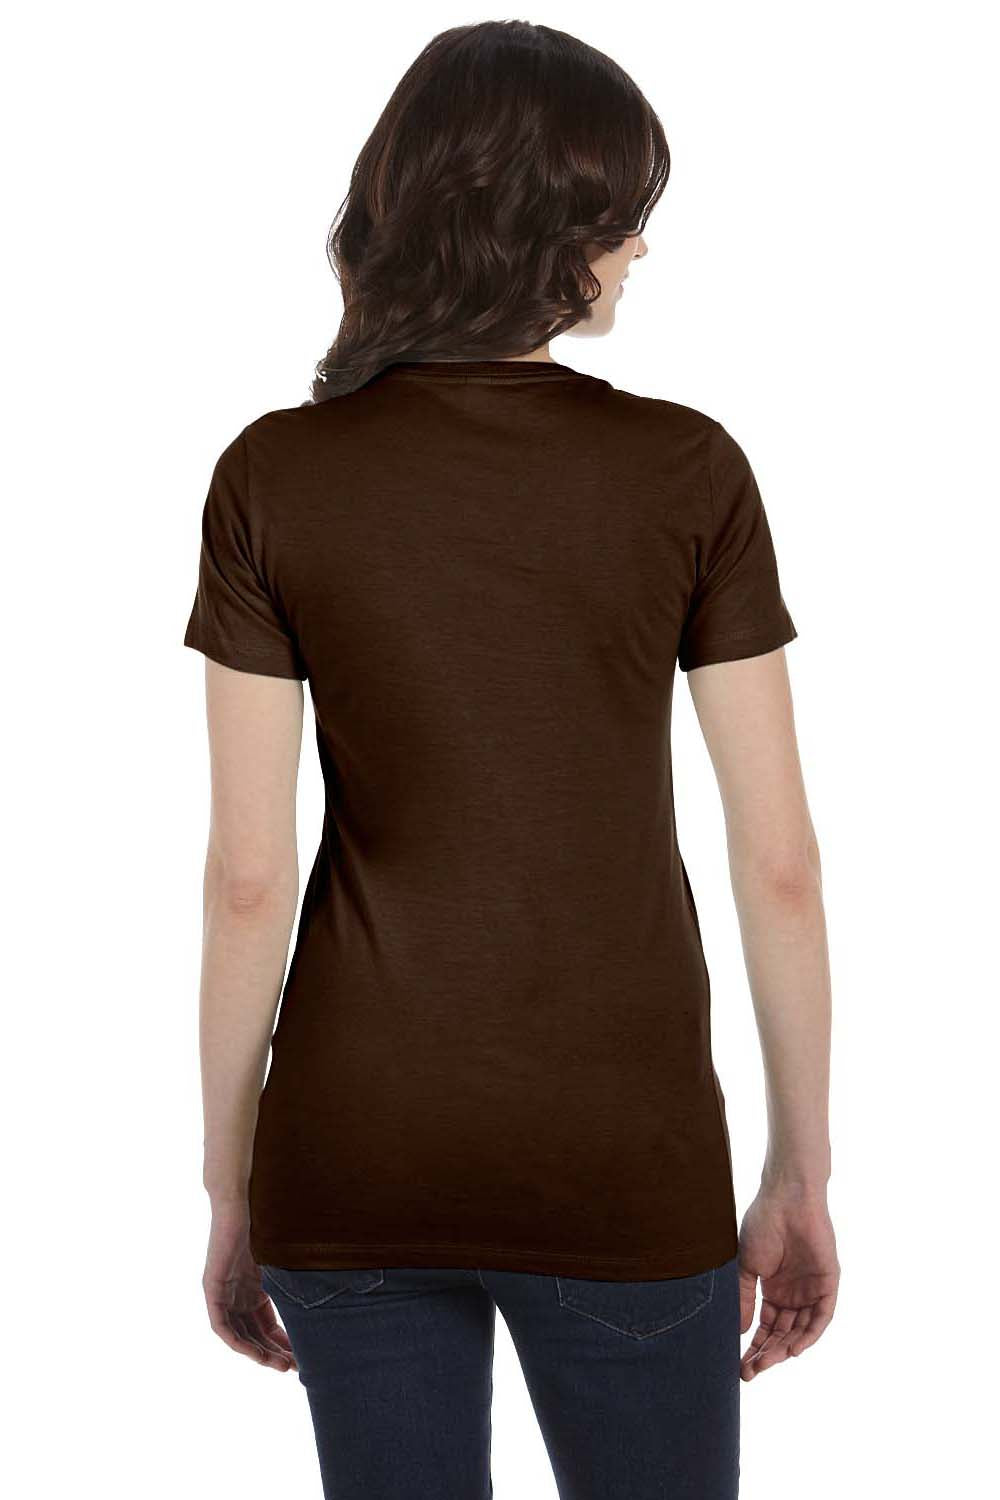 Bella + Canvas 6004 Womens The Favorite Short Sleeve Crewneck T-Shirt Chocolate Brown Back